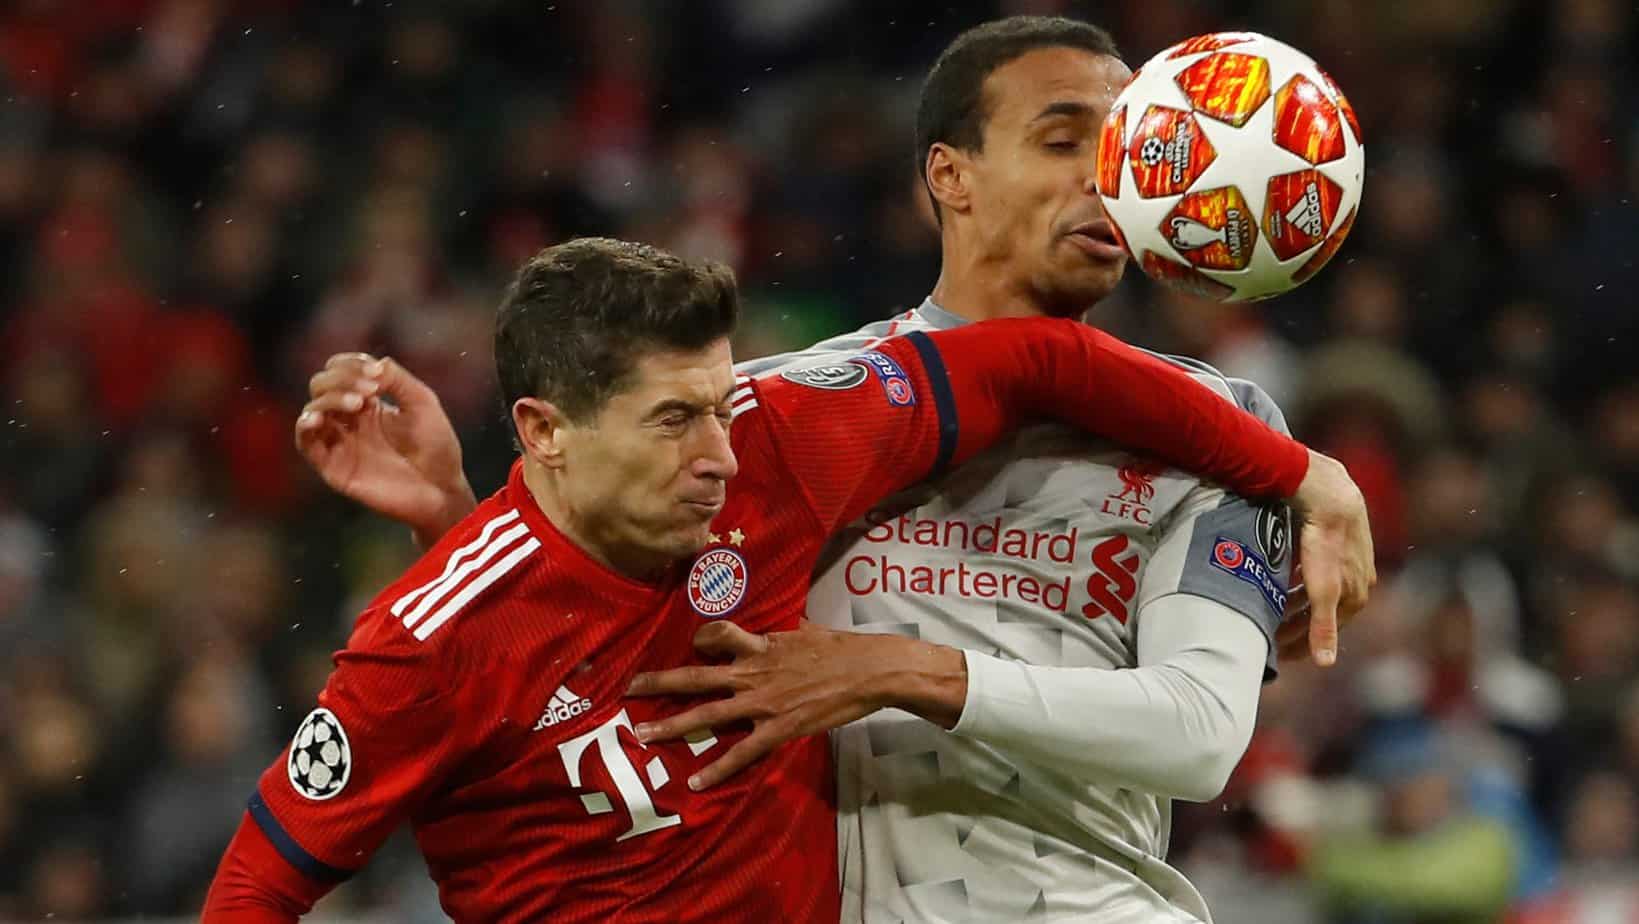 Probabilidades e previsão de apostas entre Liverpool x Bayern de Munique